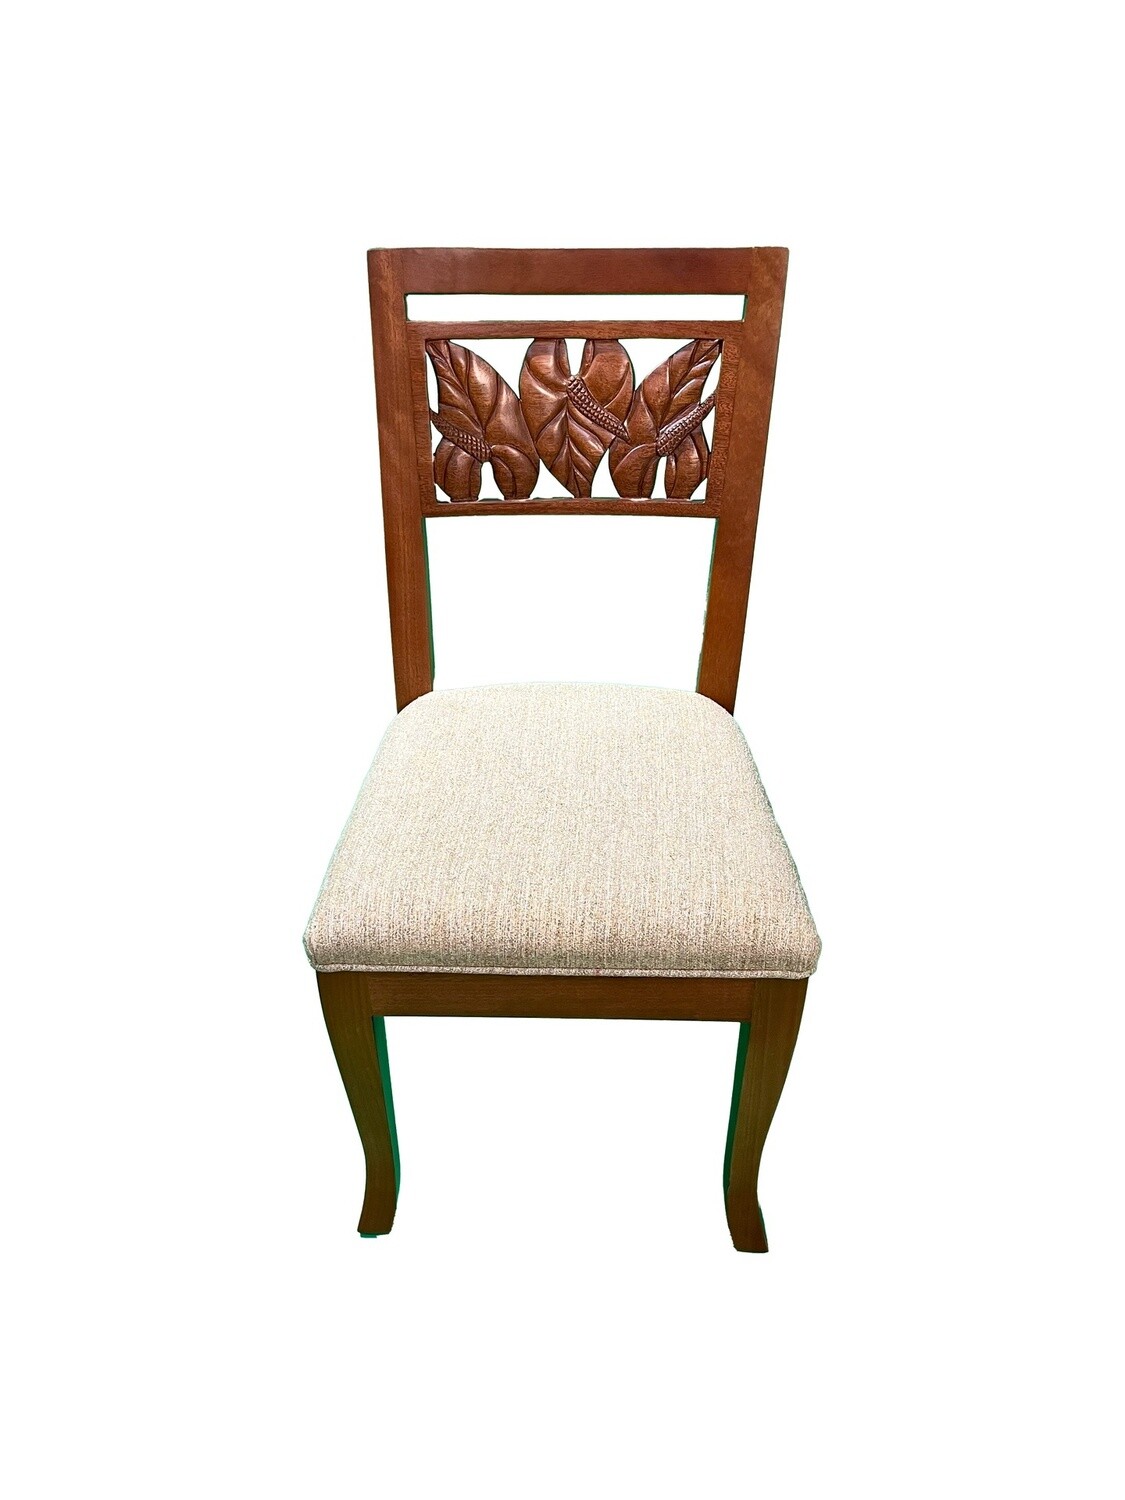 Mahogany Lanikai Chair - 7 Carving Designs